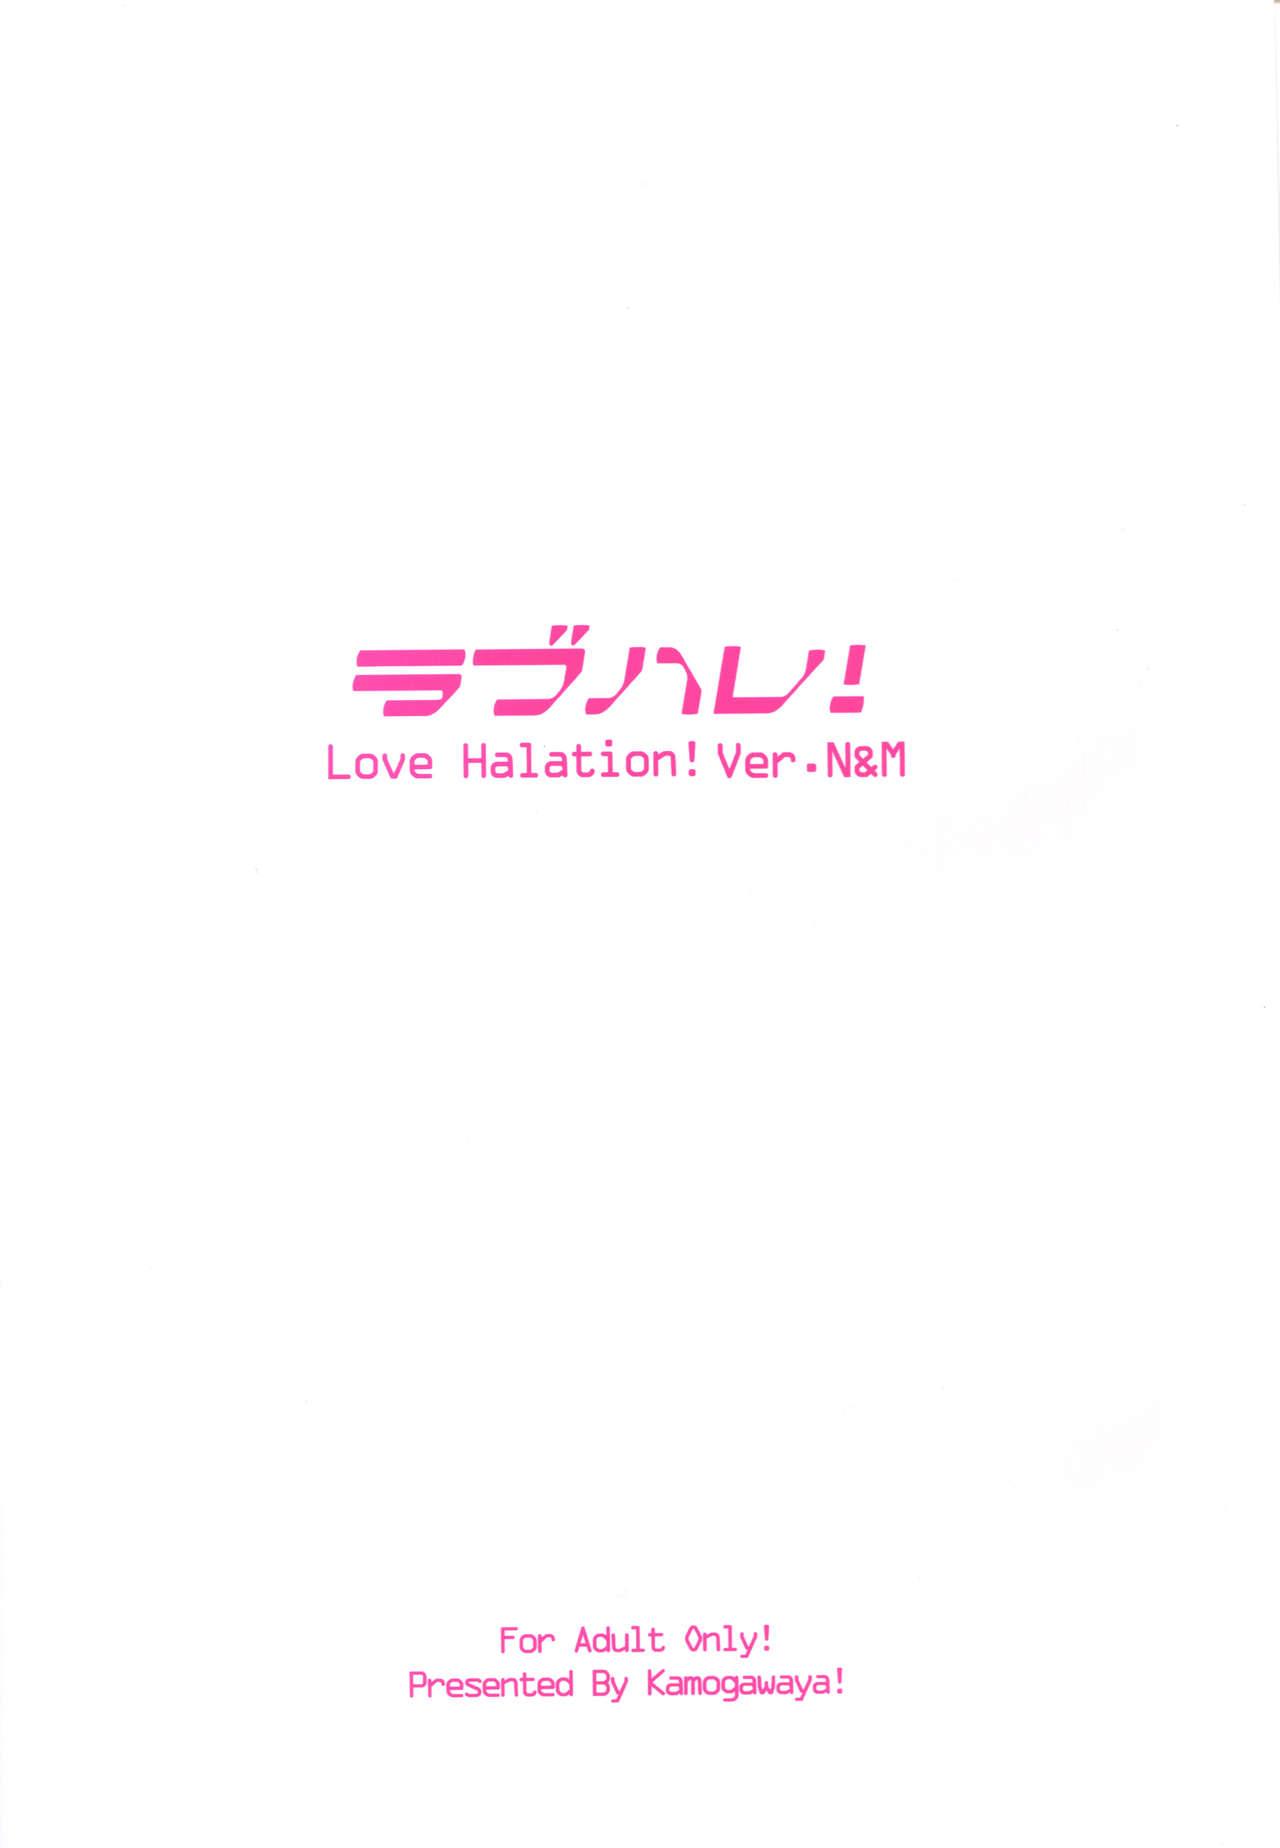 Babe LoveHala! Love Halation! Ver.N&M - Love live Titten - Page 2